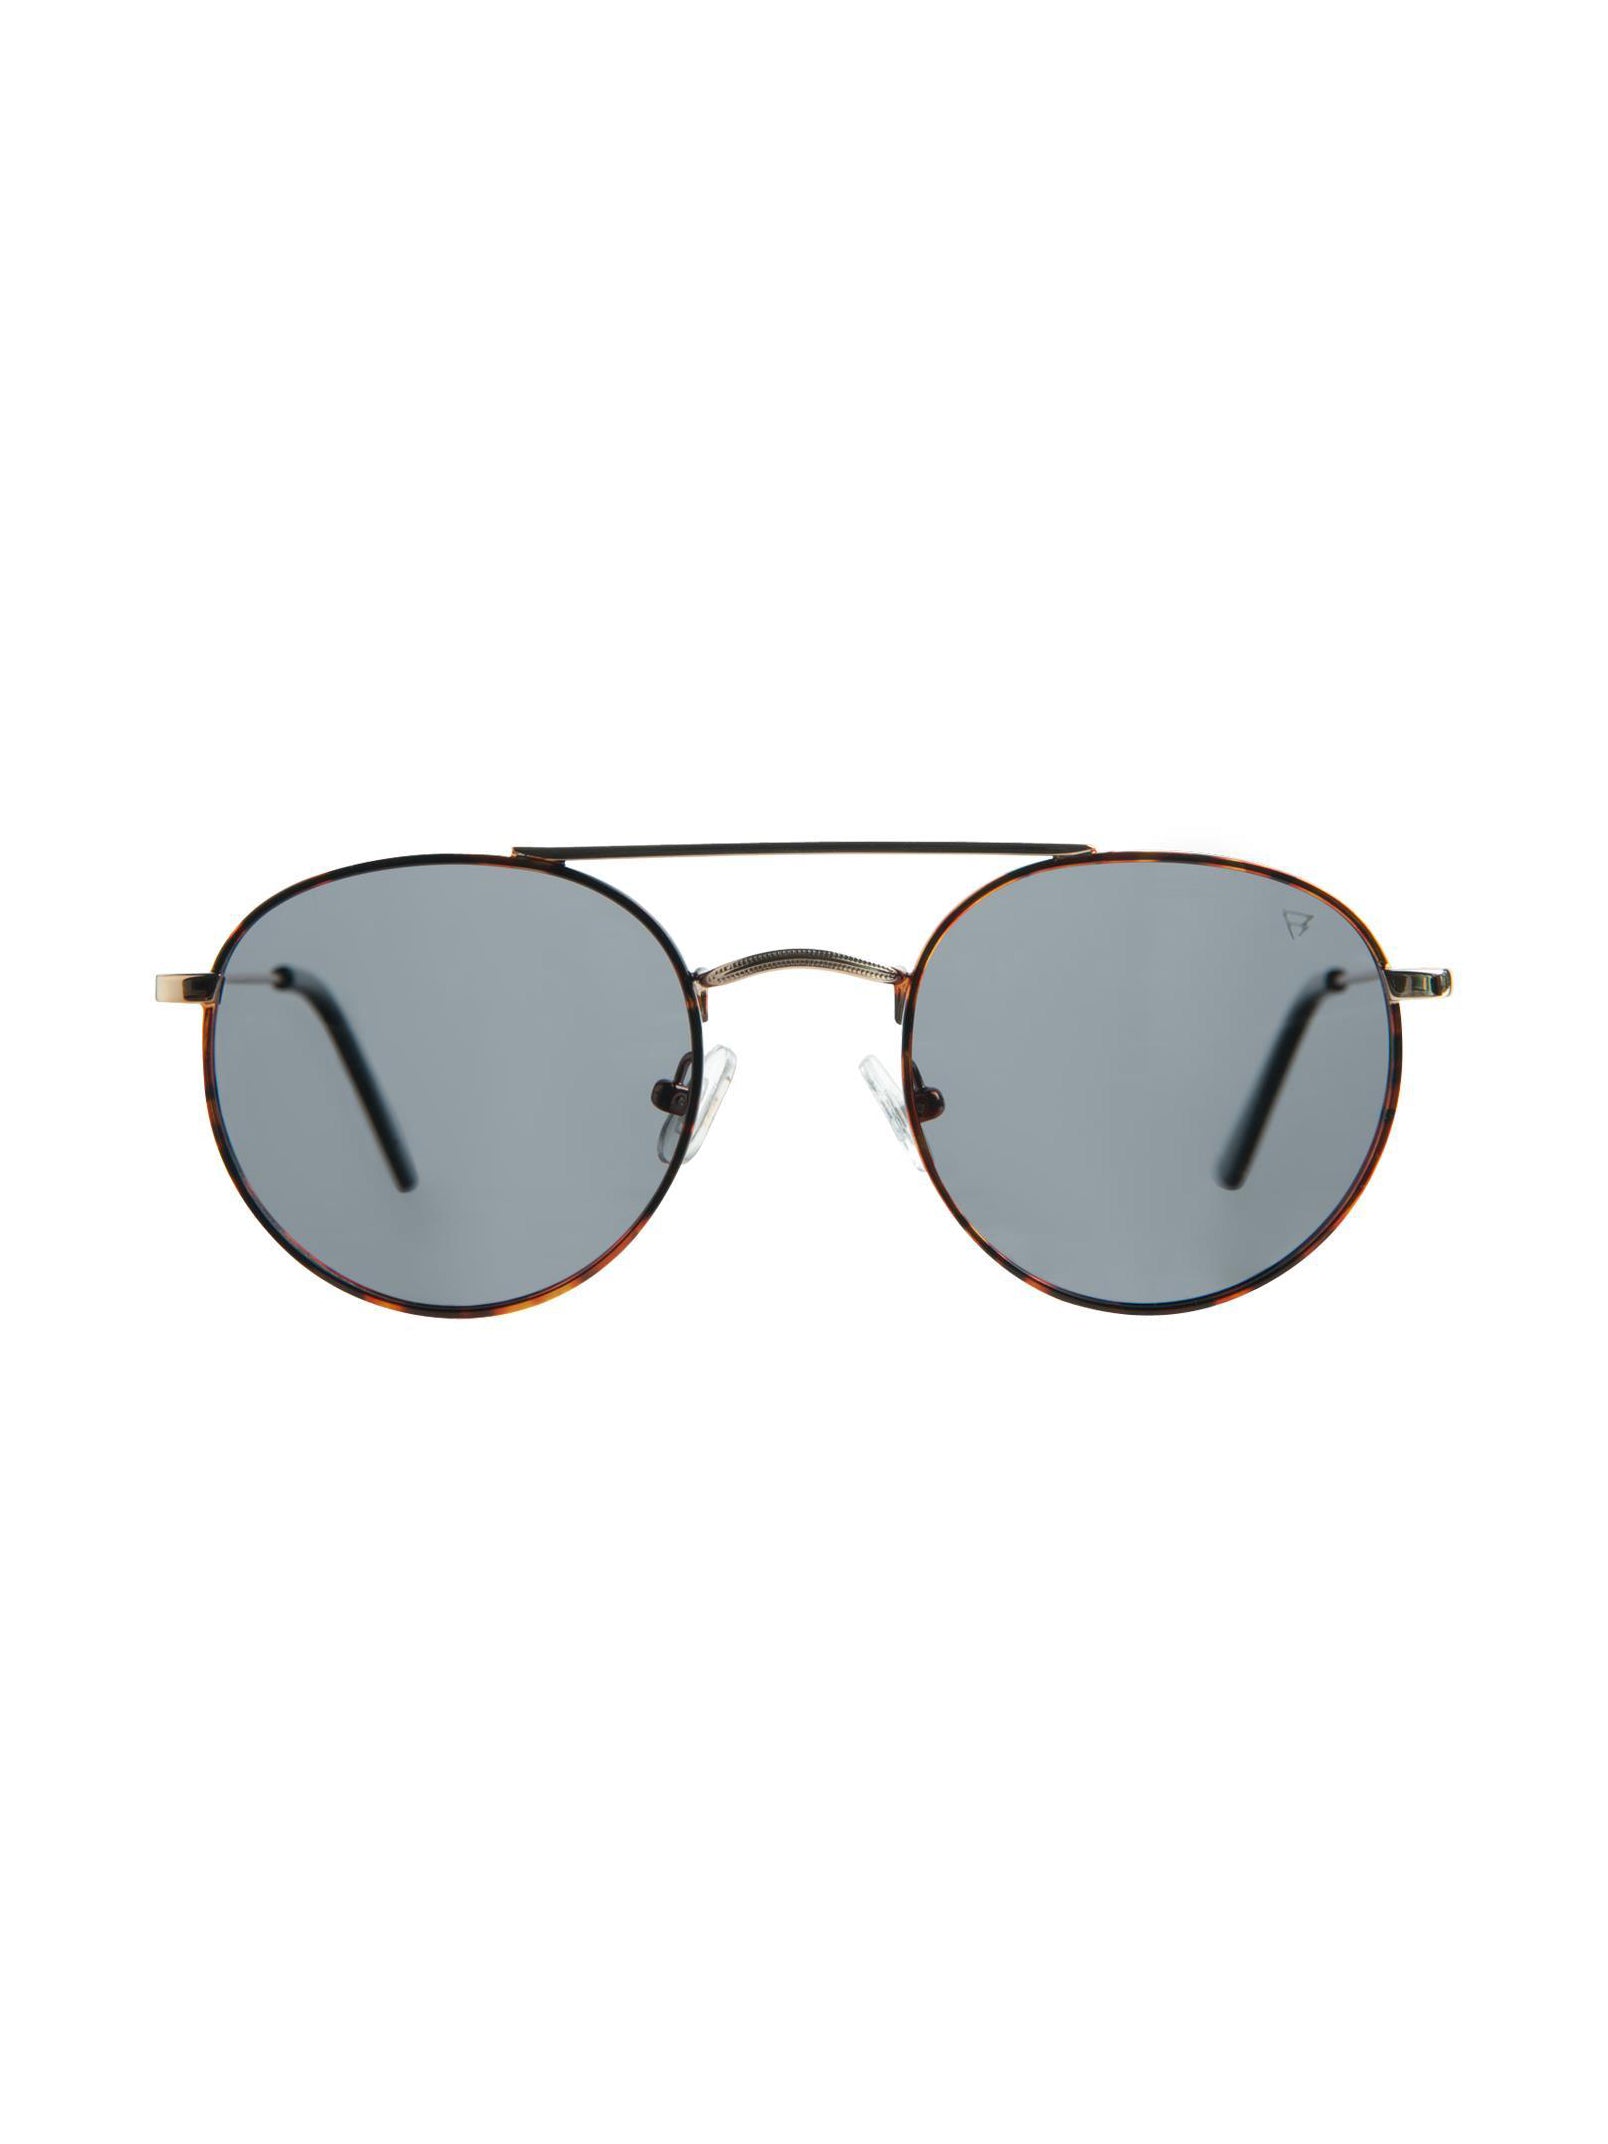 Banyoles-1 Unisex Sunglasses | Brown